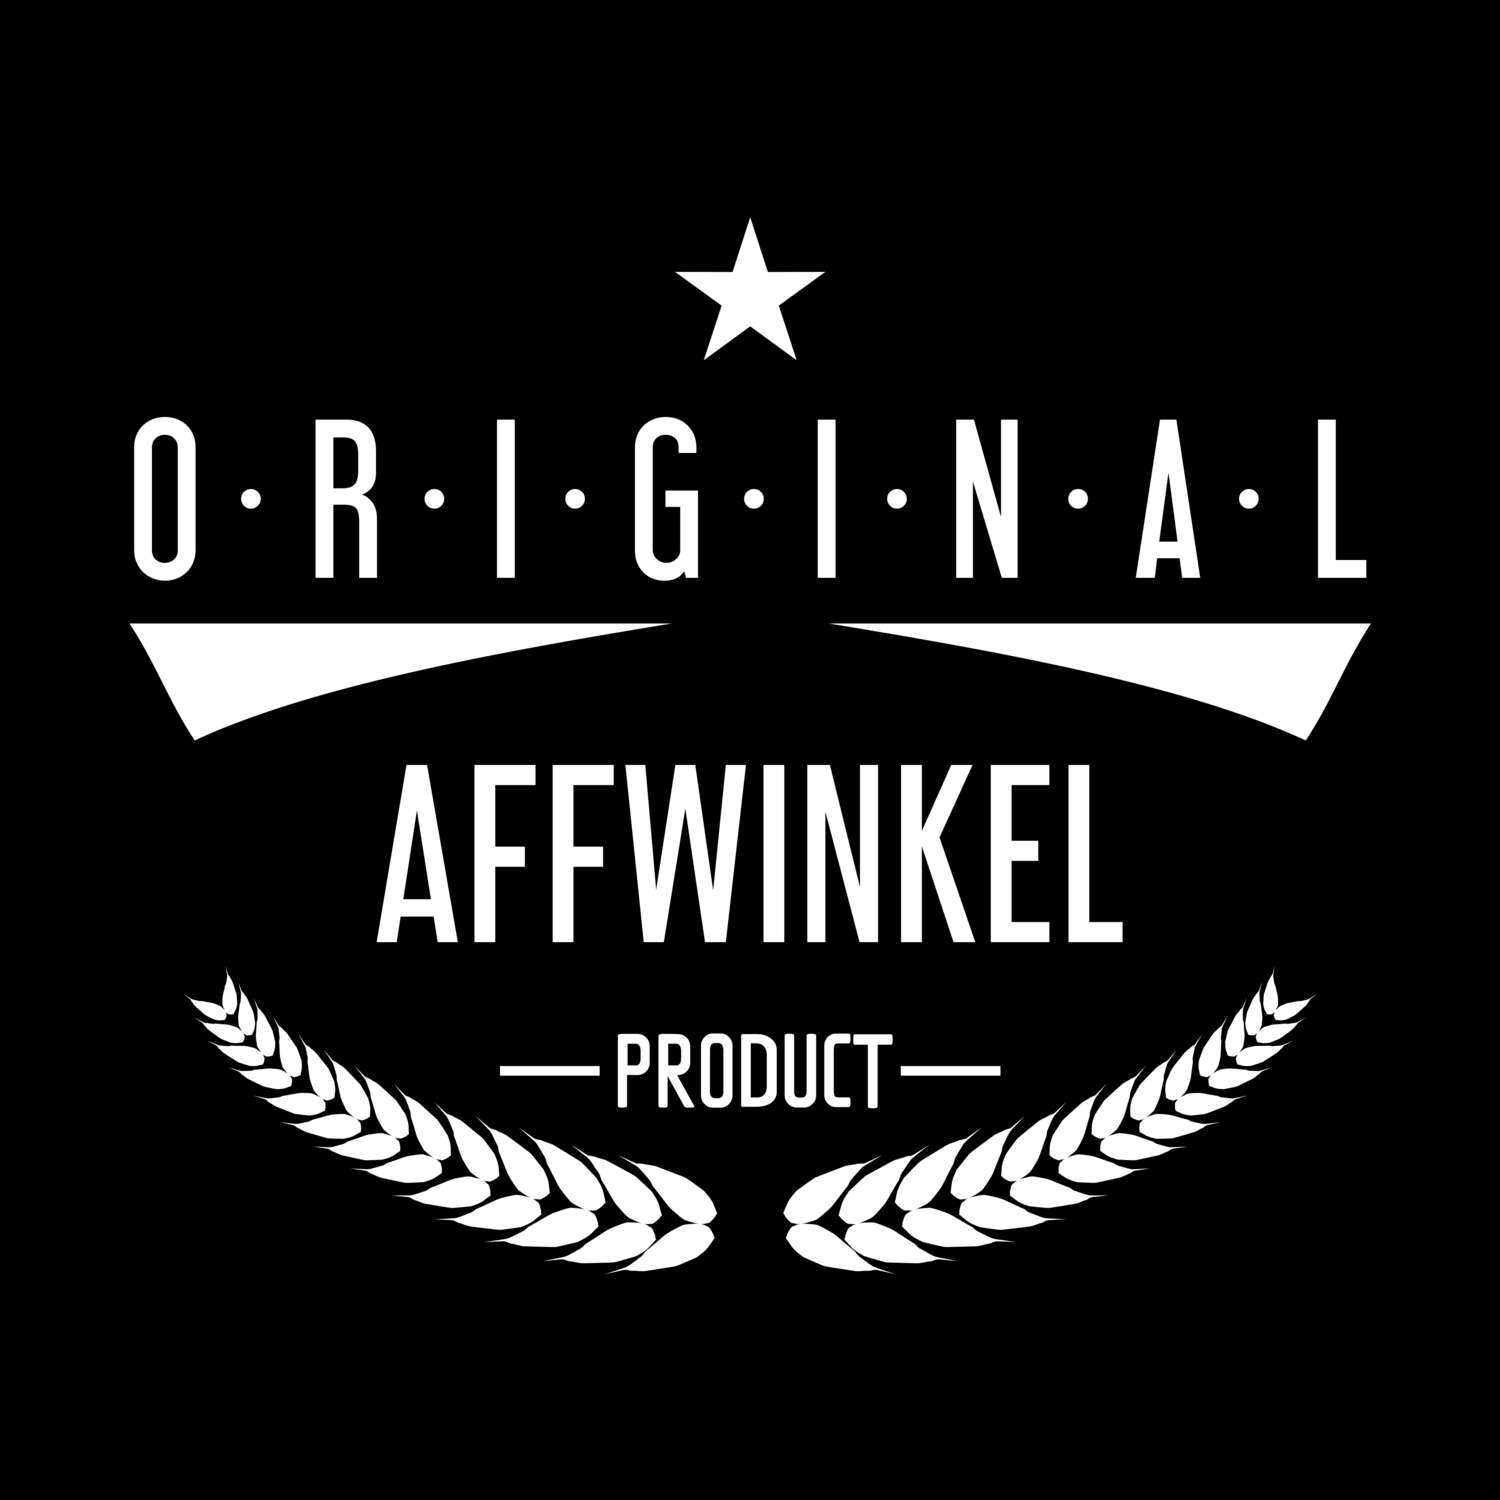 Affwinkel T-Shirt »Original Product«